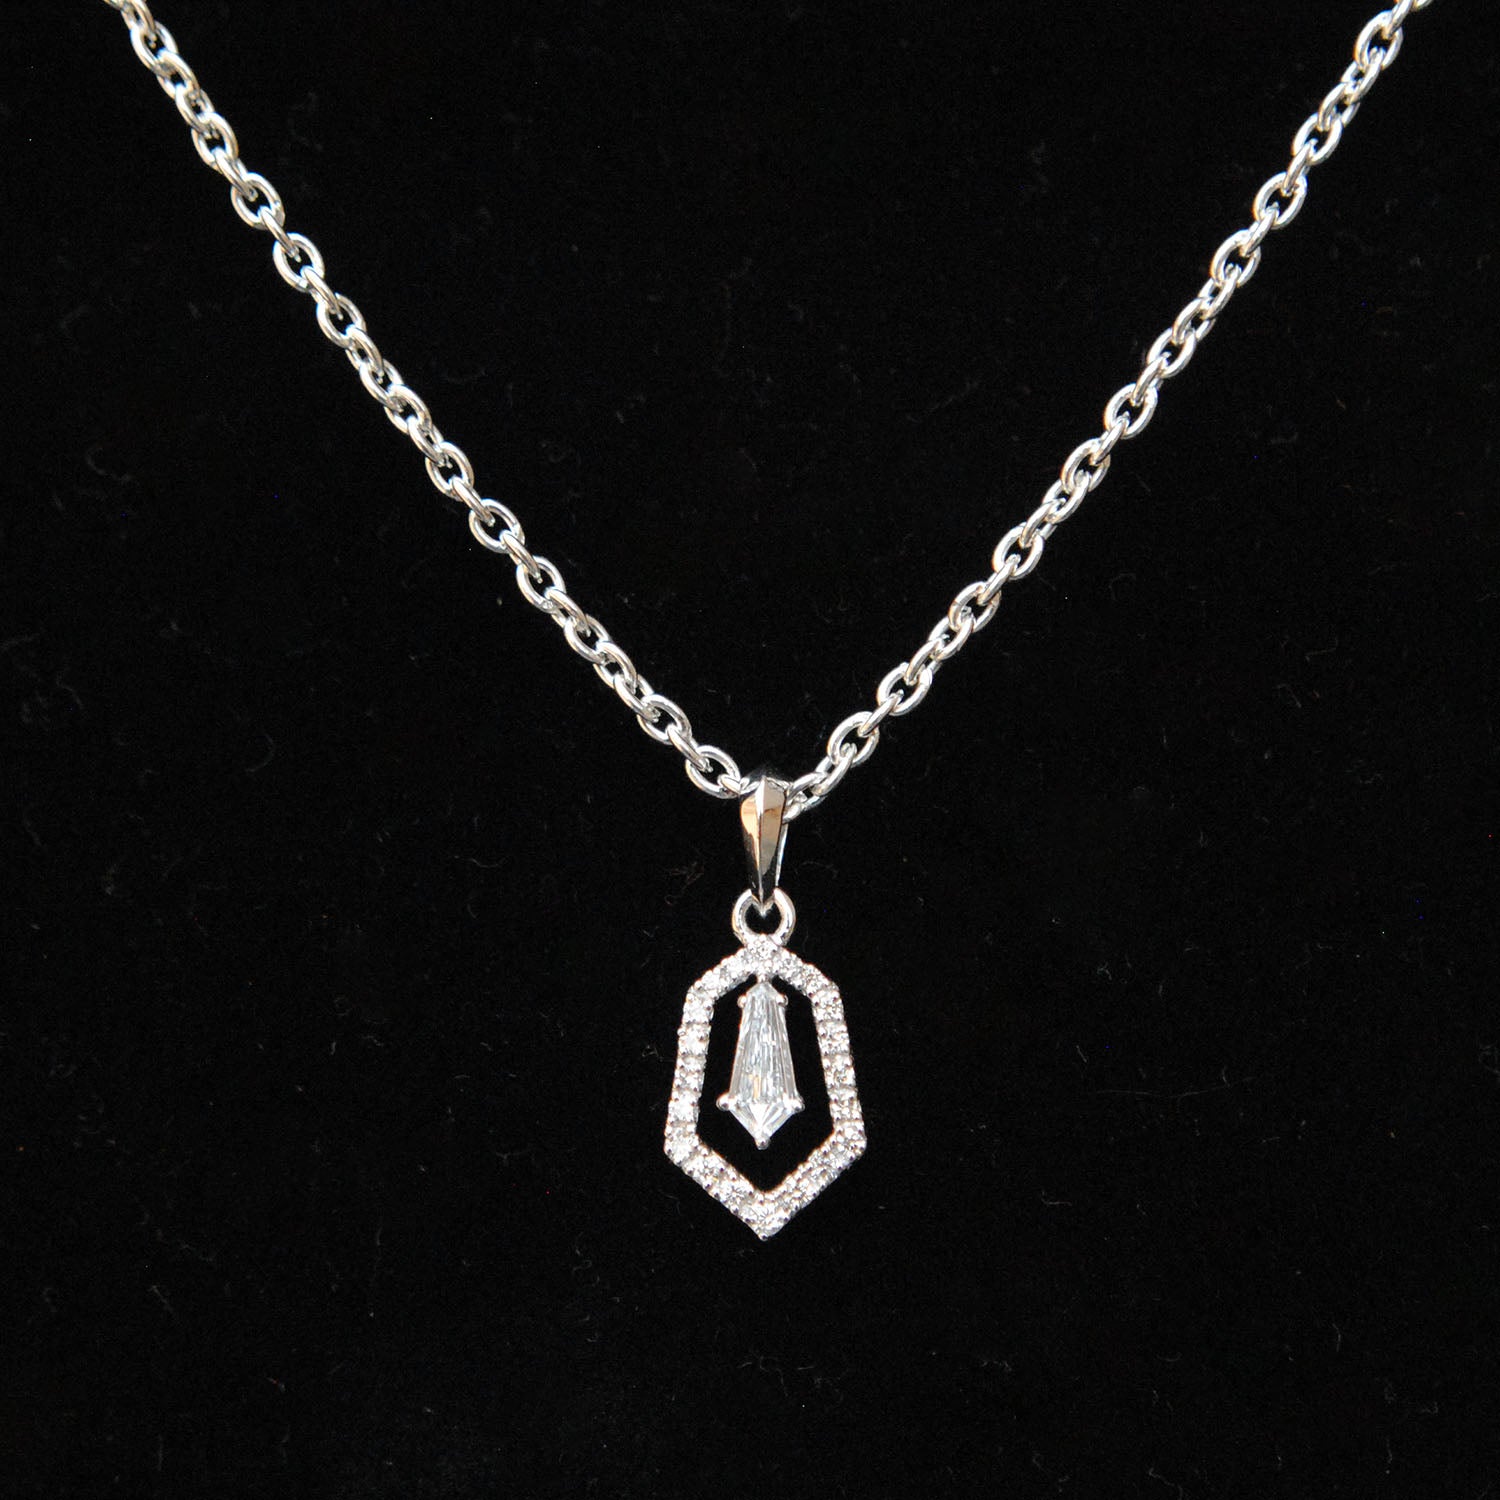 White Gold Diamond Open Heart Pendant Necklace | Lee Michaels Fine Jewelry